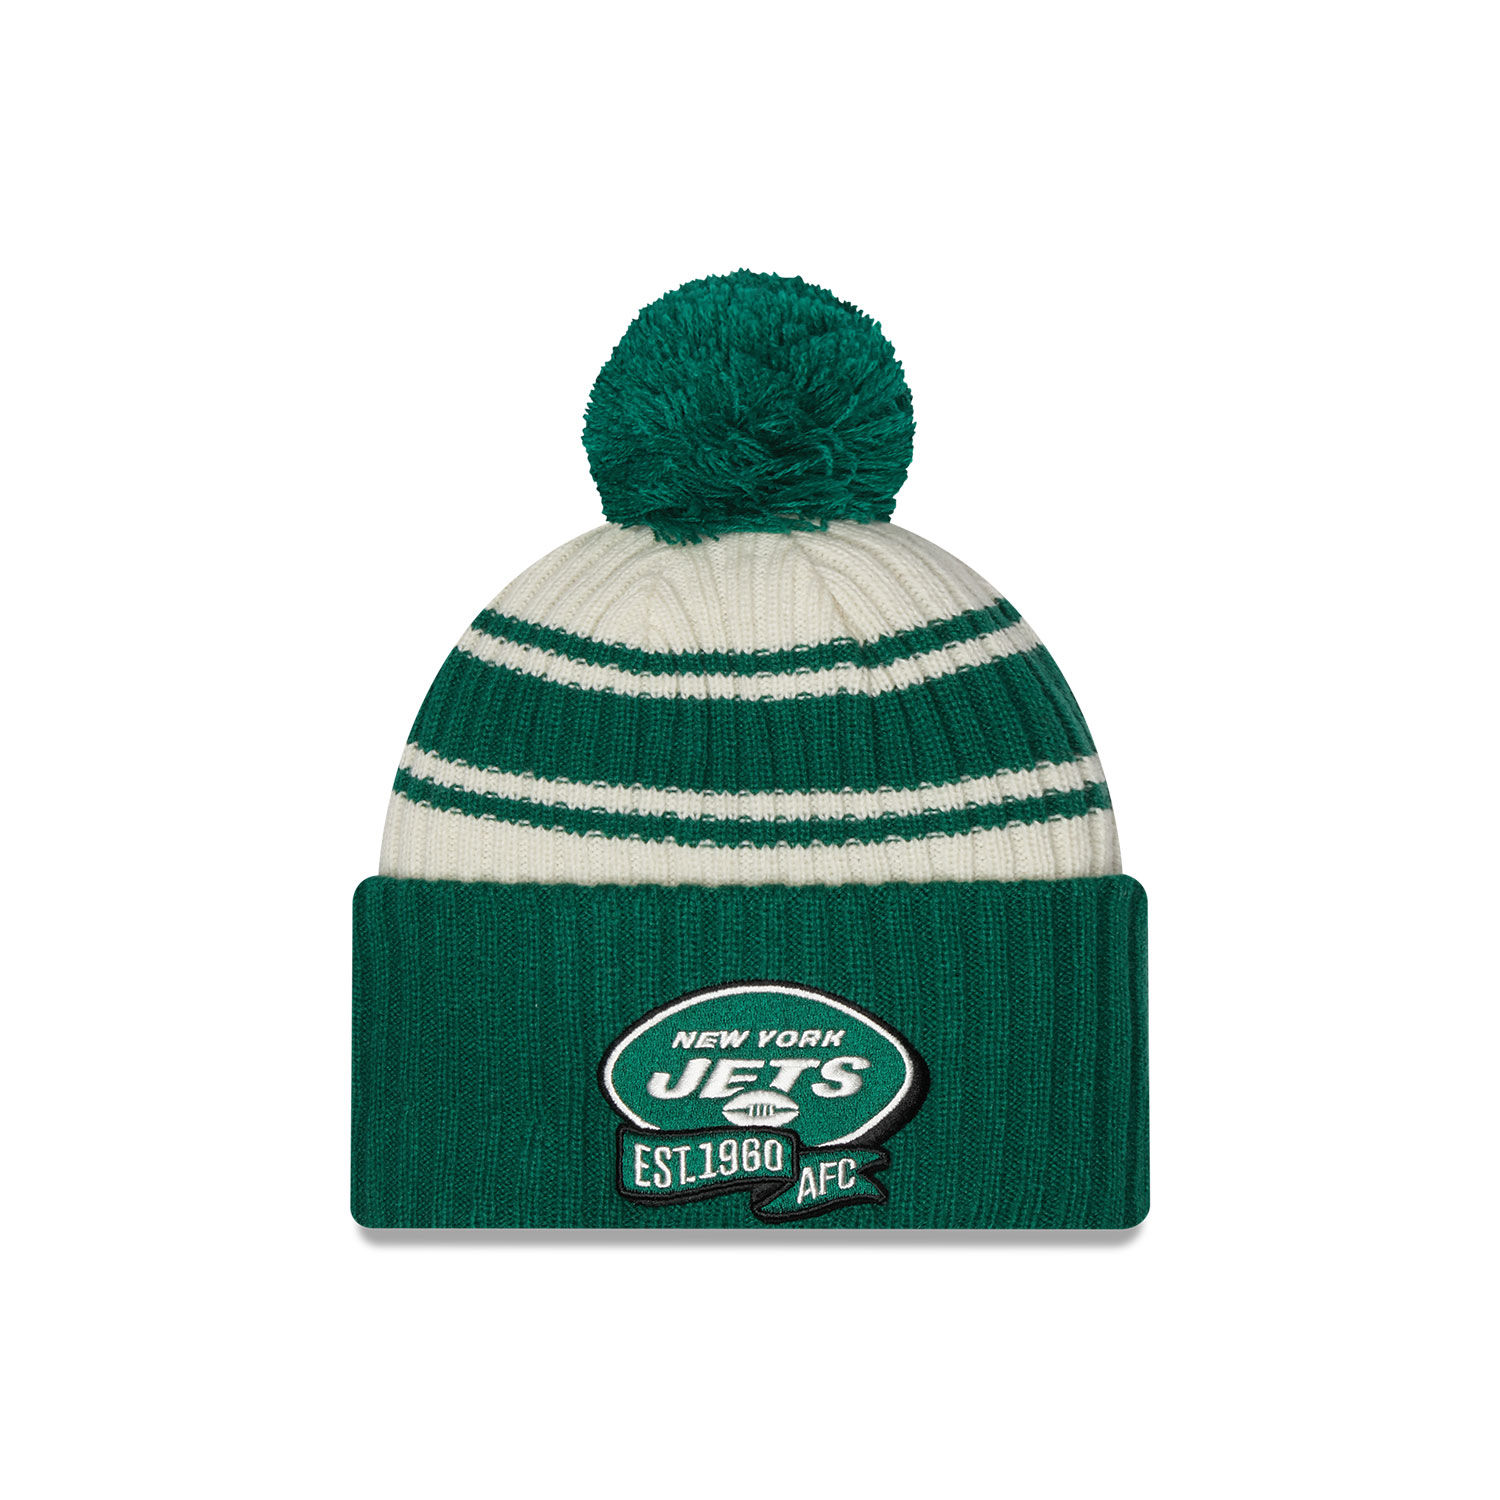 New York Jets NFL Sideline Green Beanie Hat